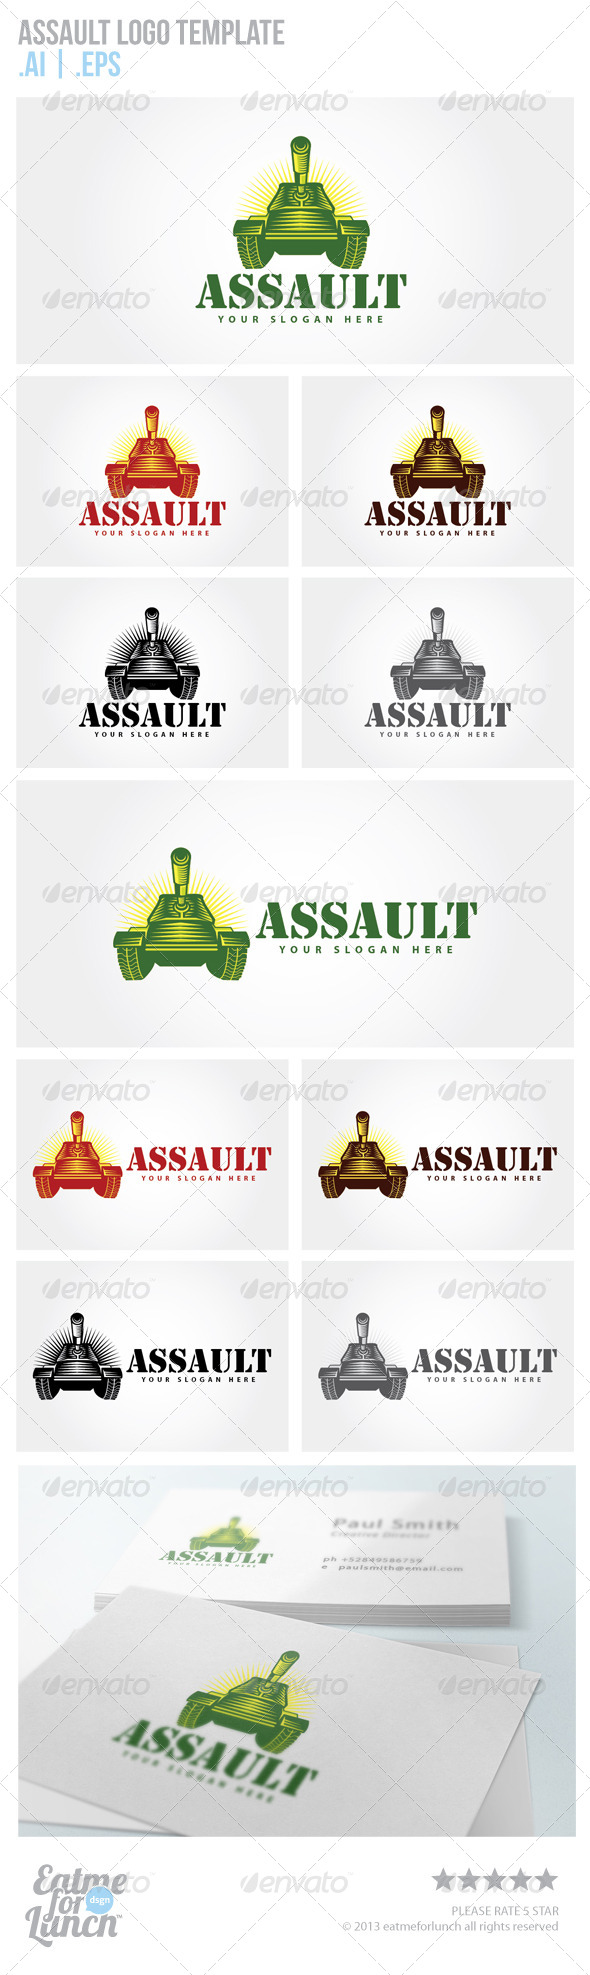 GraphicRiver Army Tank Logo Templates 6542812